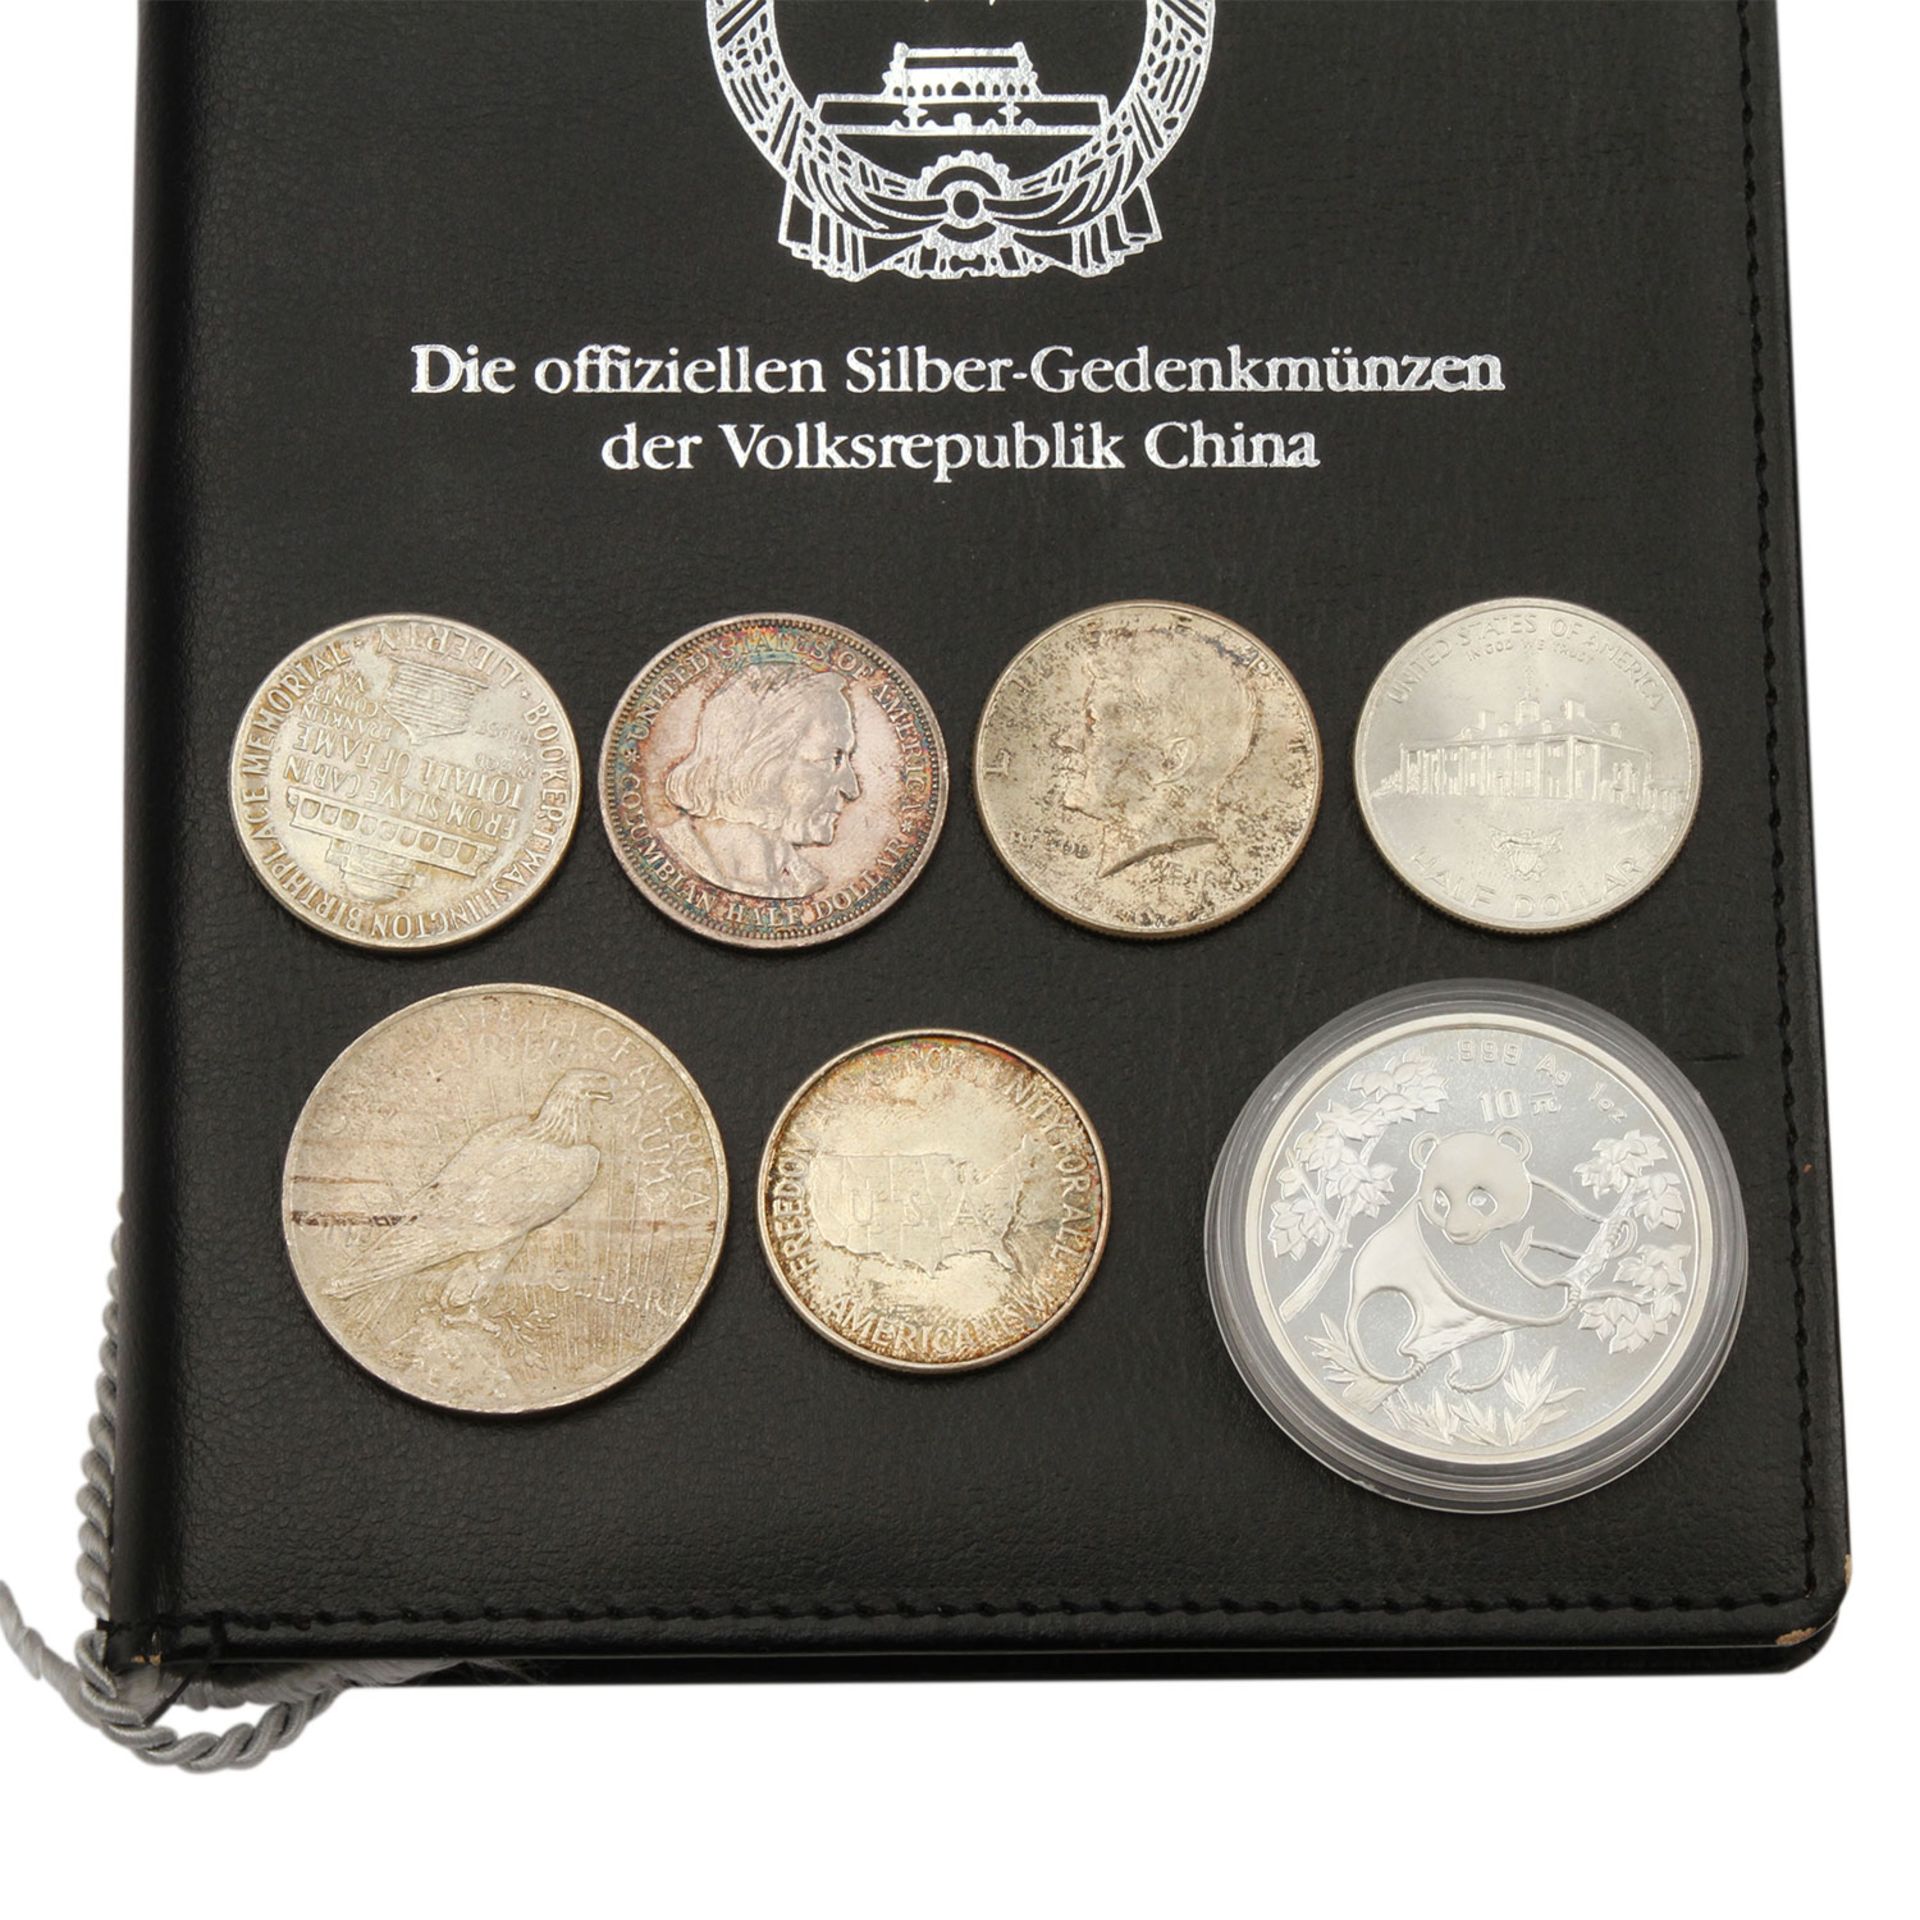 China Silber-Gedenkmünzen inSpezialschatulle. 13 Stück mit u.a. 10 Yuan 1992 zu 1 Unze Silber - Bild 3 aus 4